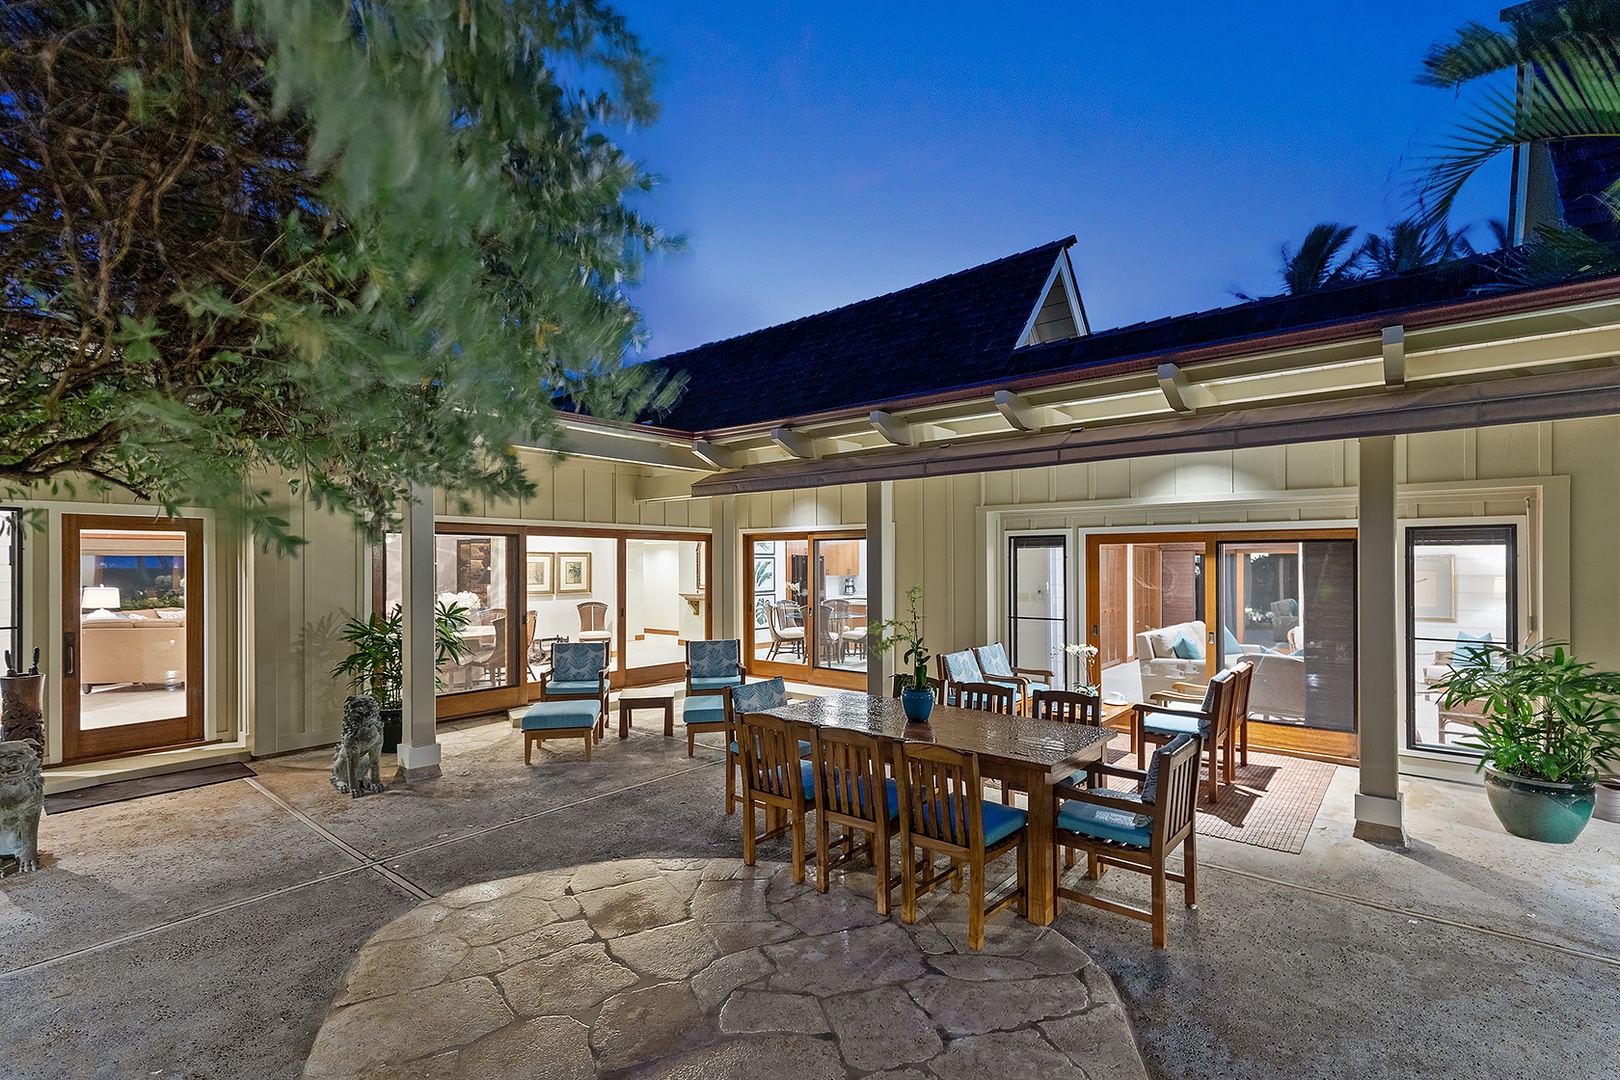 Kailua Vacation Rentals, Kailua Shores Estate 8 Bedroom - Main House - Outdoor Lanai and Outdoor Dining